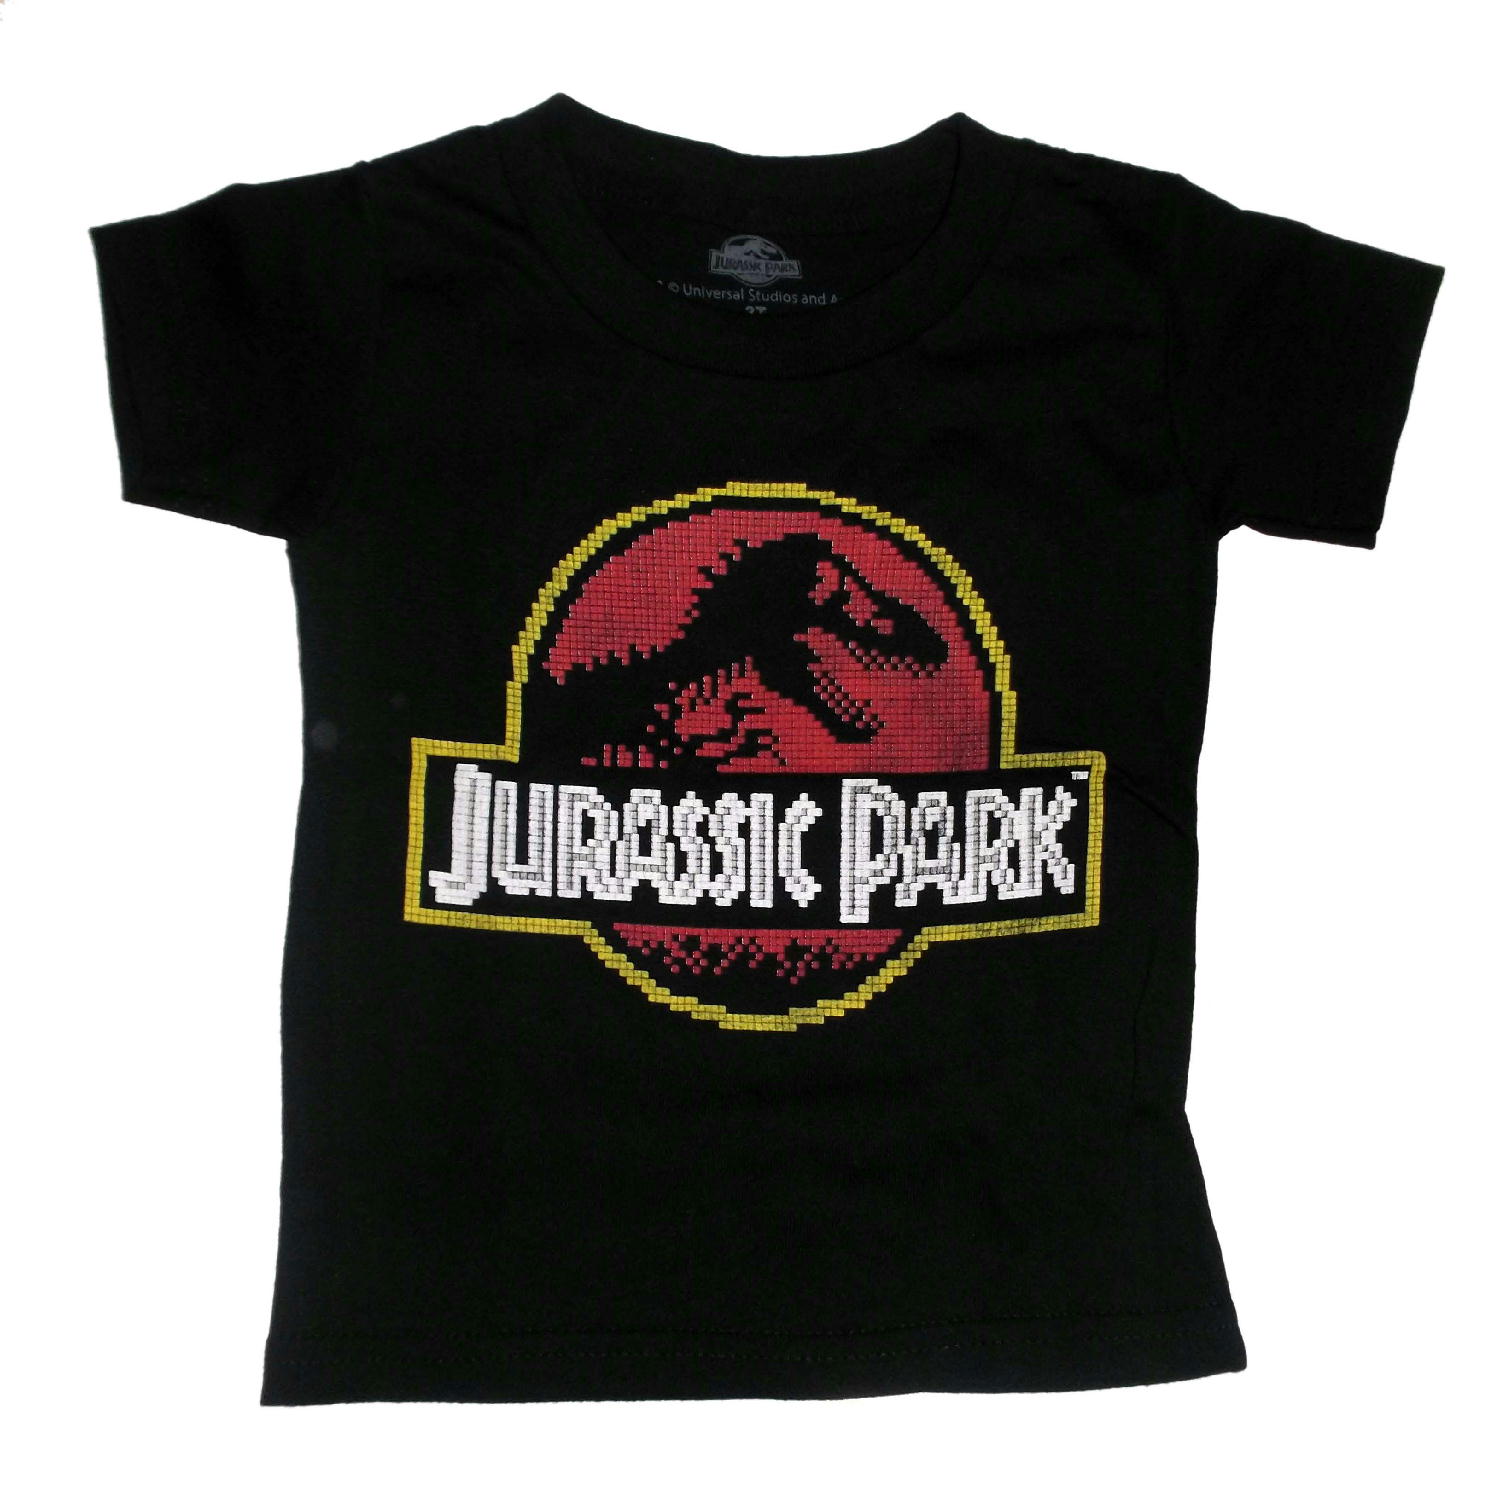 ◎USJ ジュラシックパーク Tシャツ Jurassic Park shirt - 映画関連グッズ